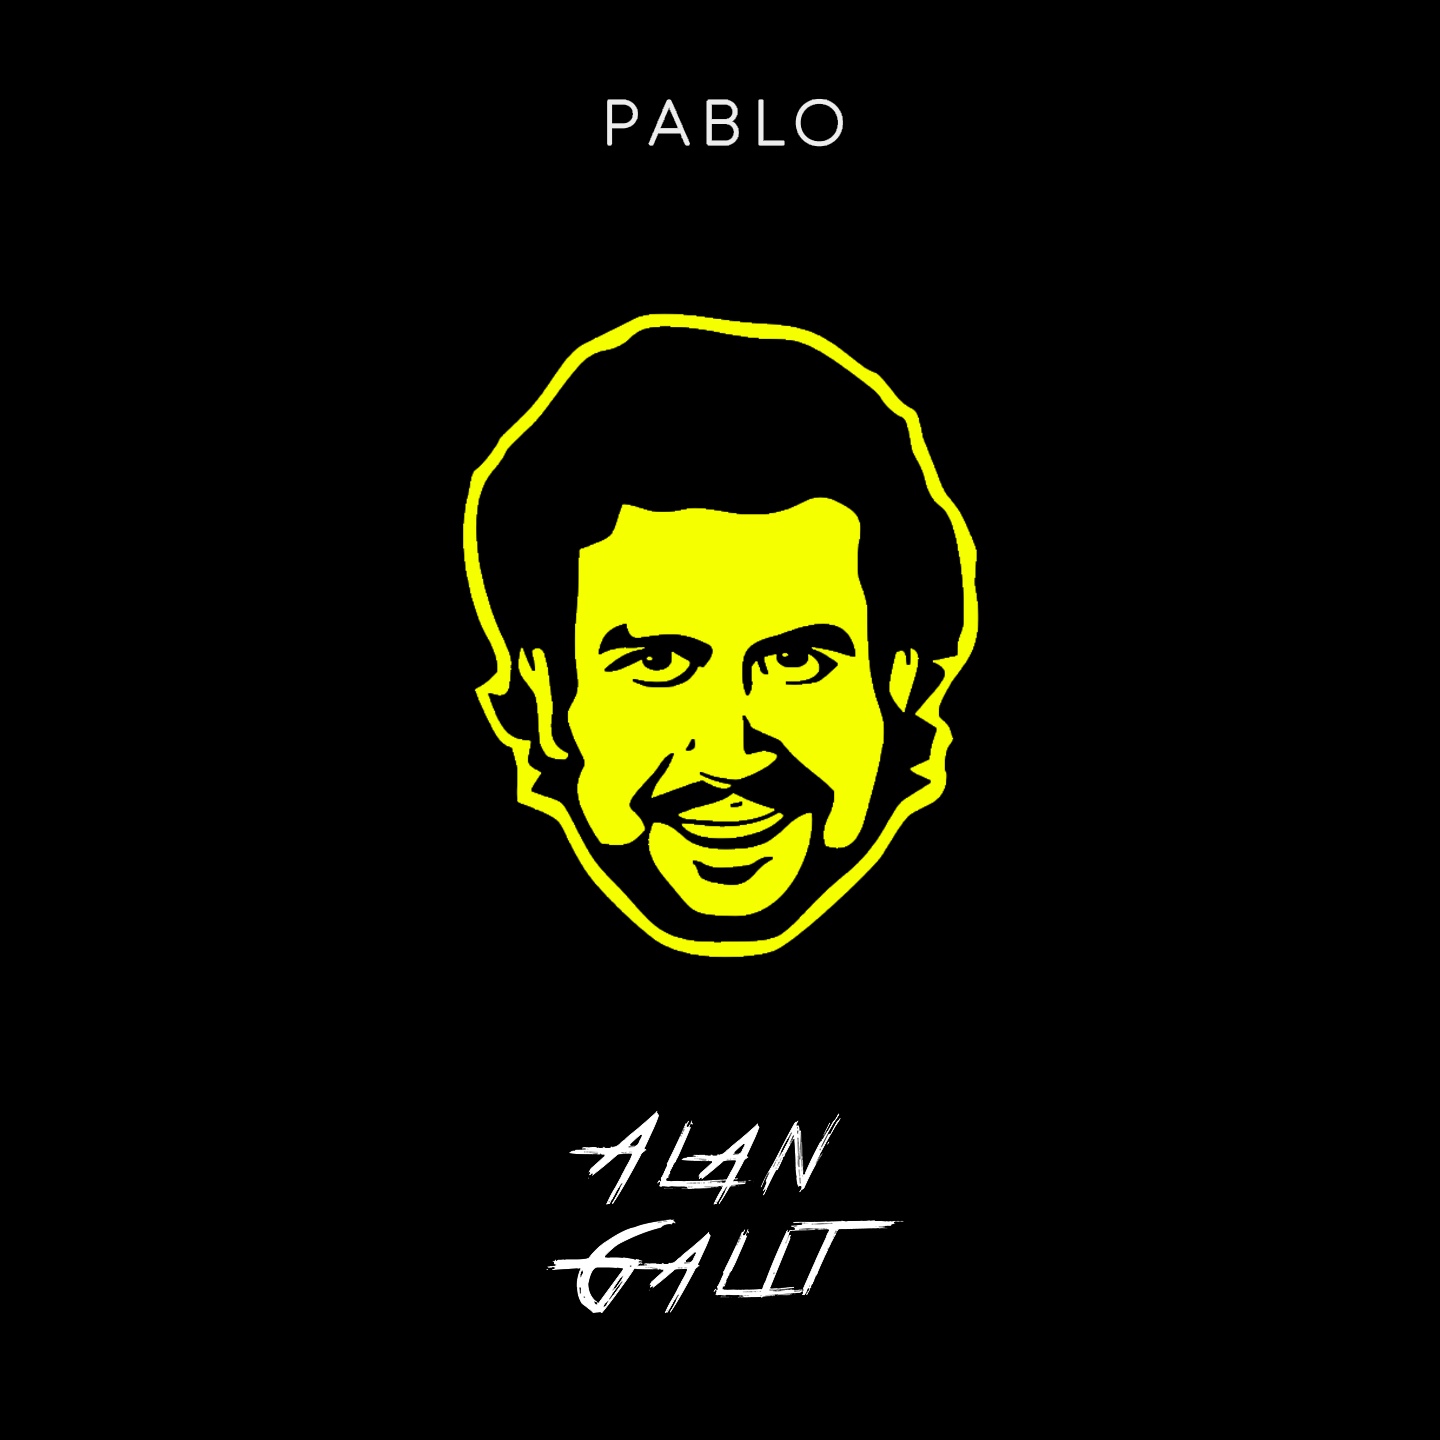 Alan Galit - Pablo (Original Mix)